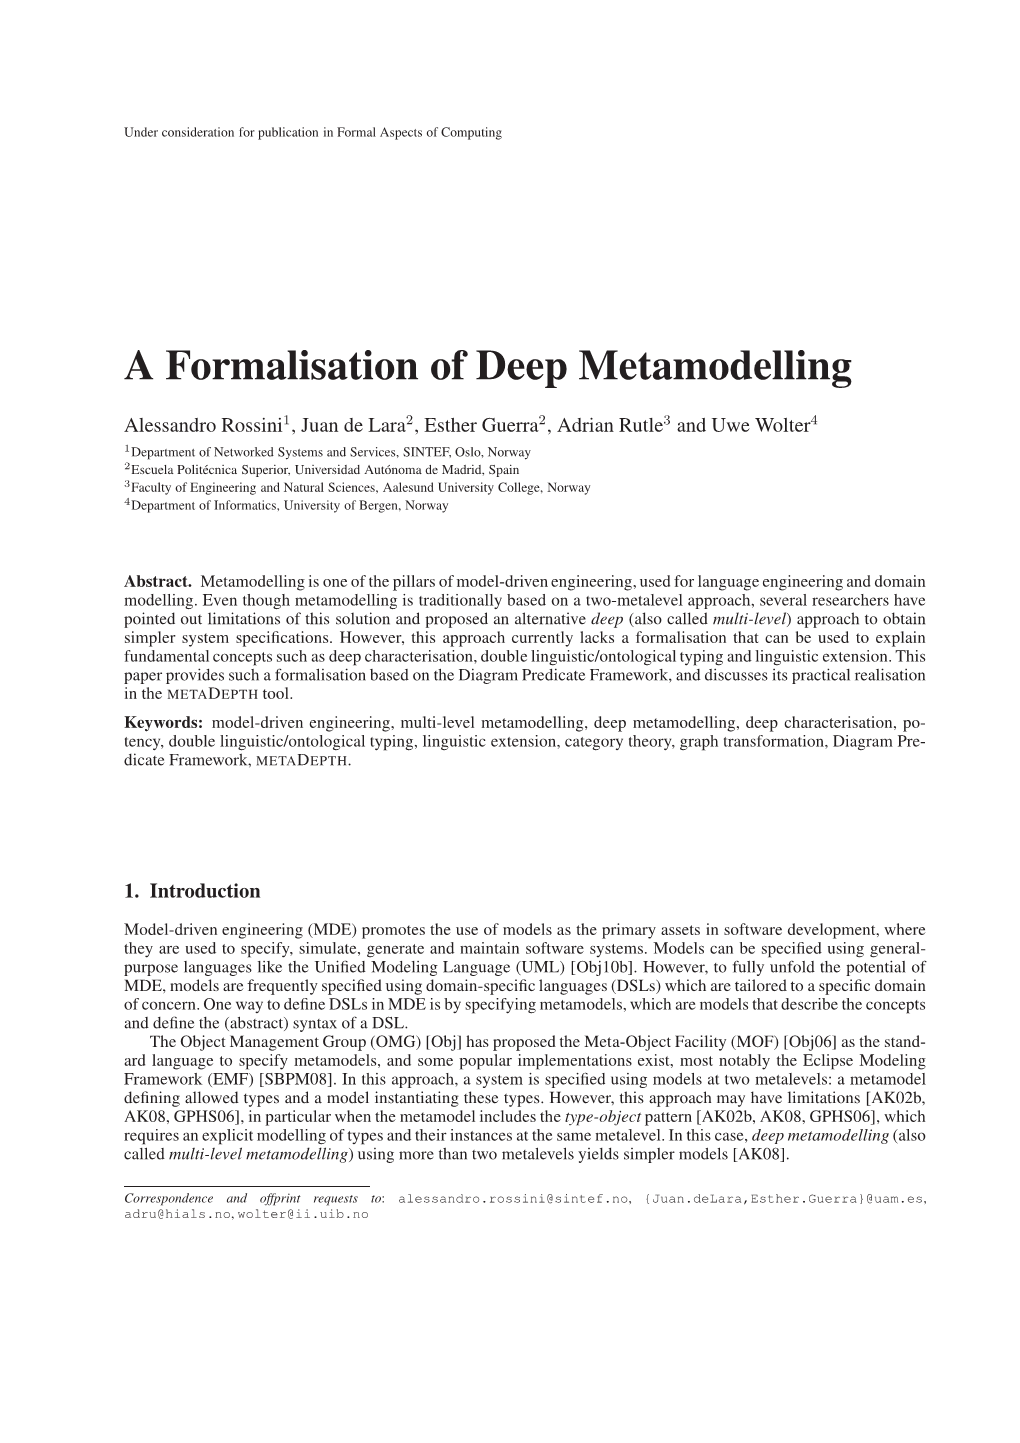 A Formalisation of Deep Metamodelling